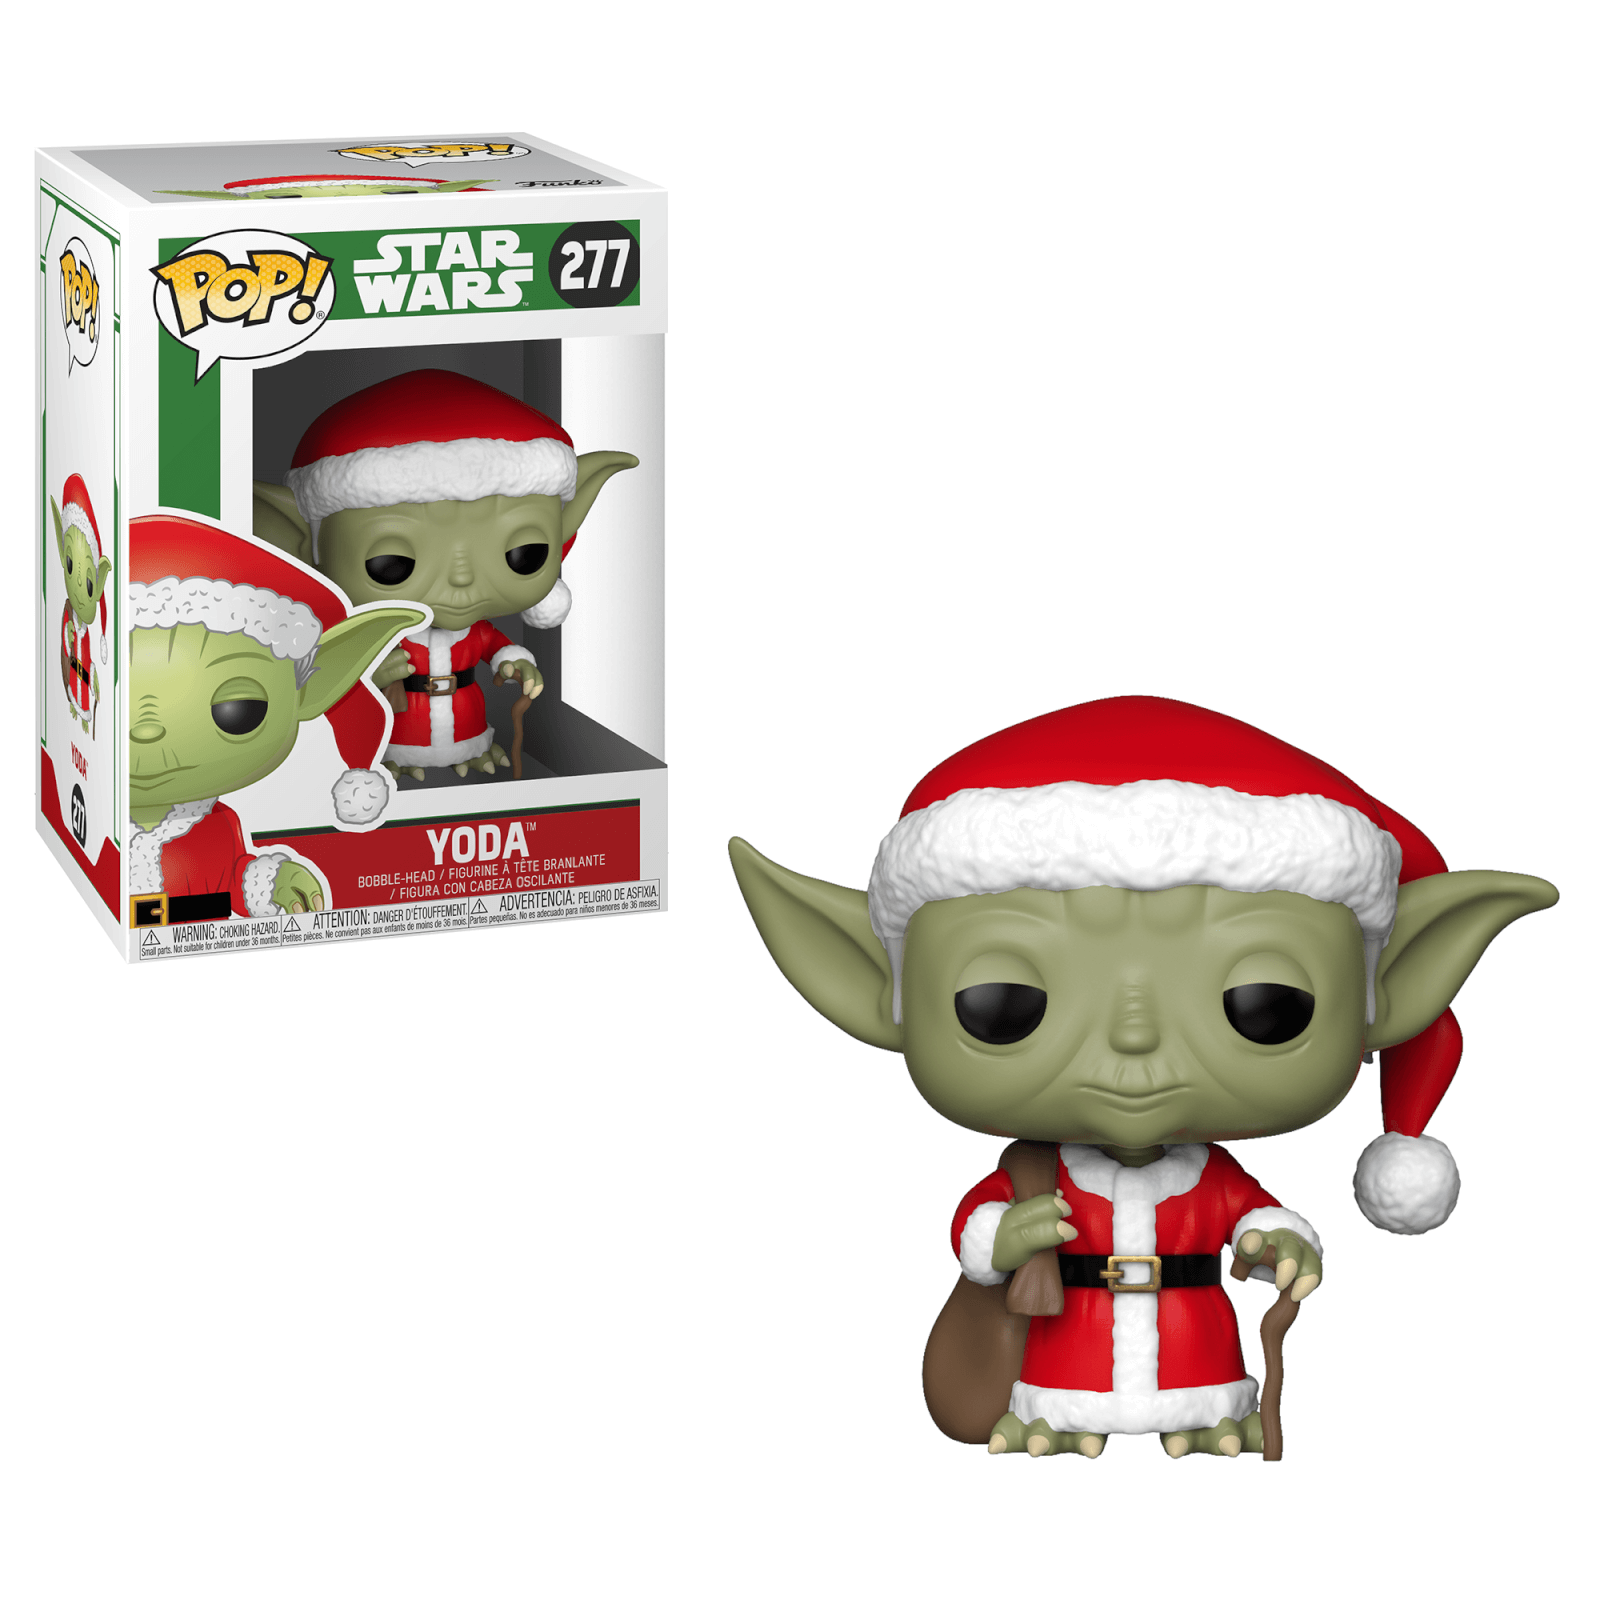 Star Wars Holiday - Santa Yoda Pop! Vinyl Figure